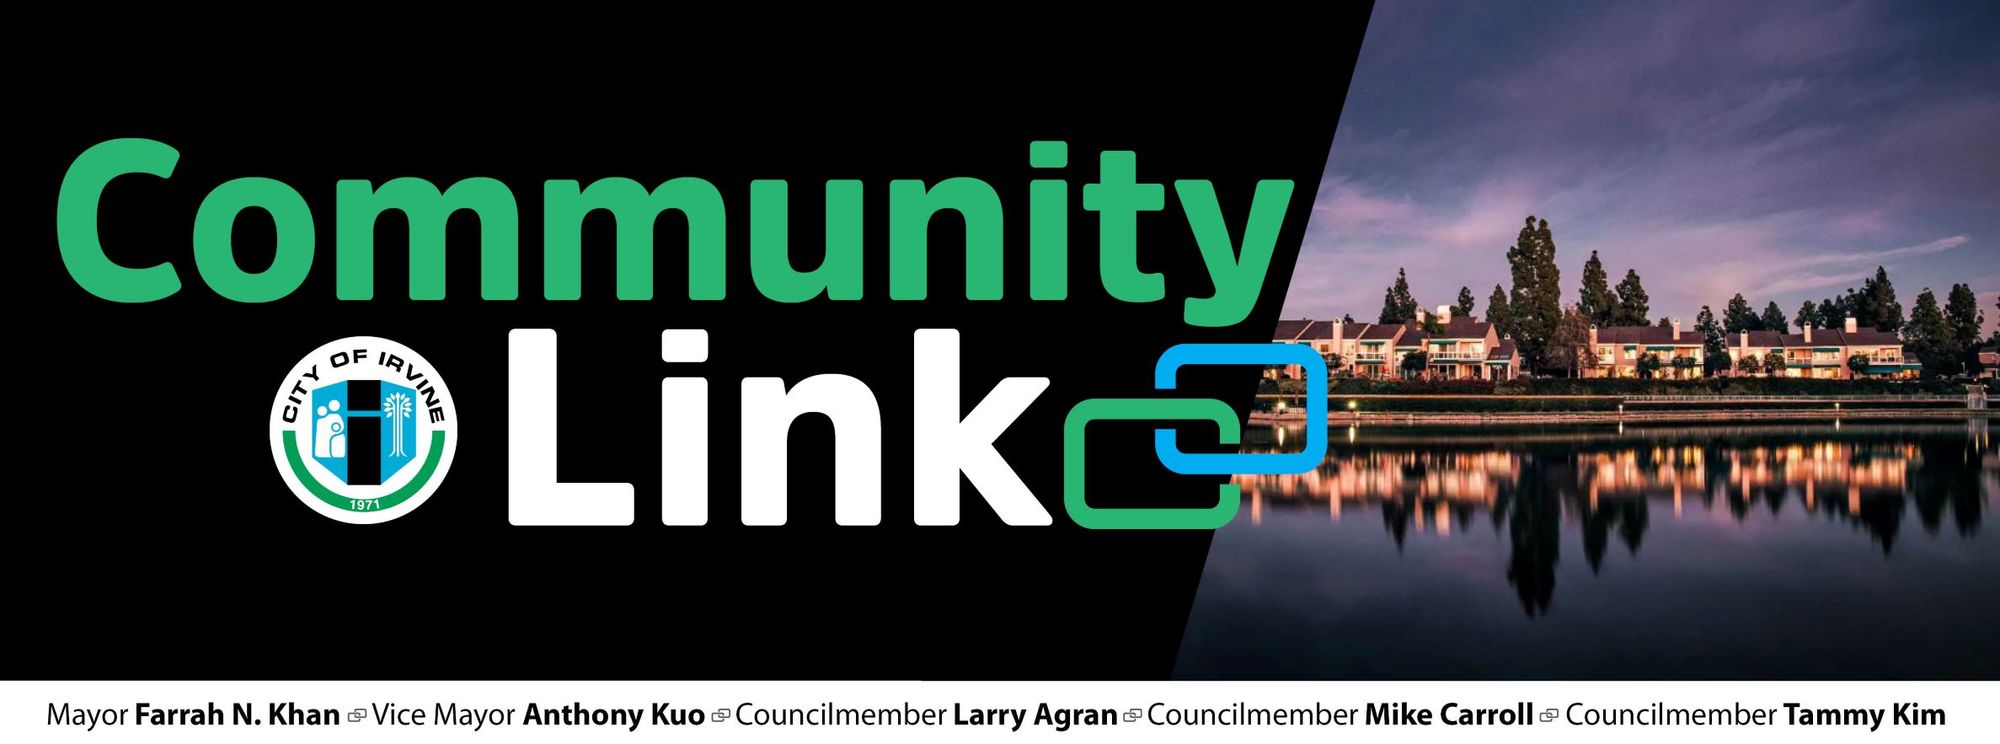 Community Link Newsletter